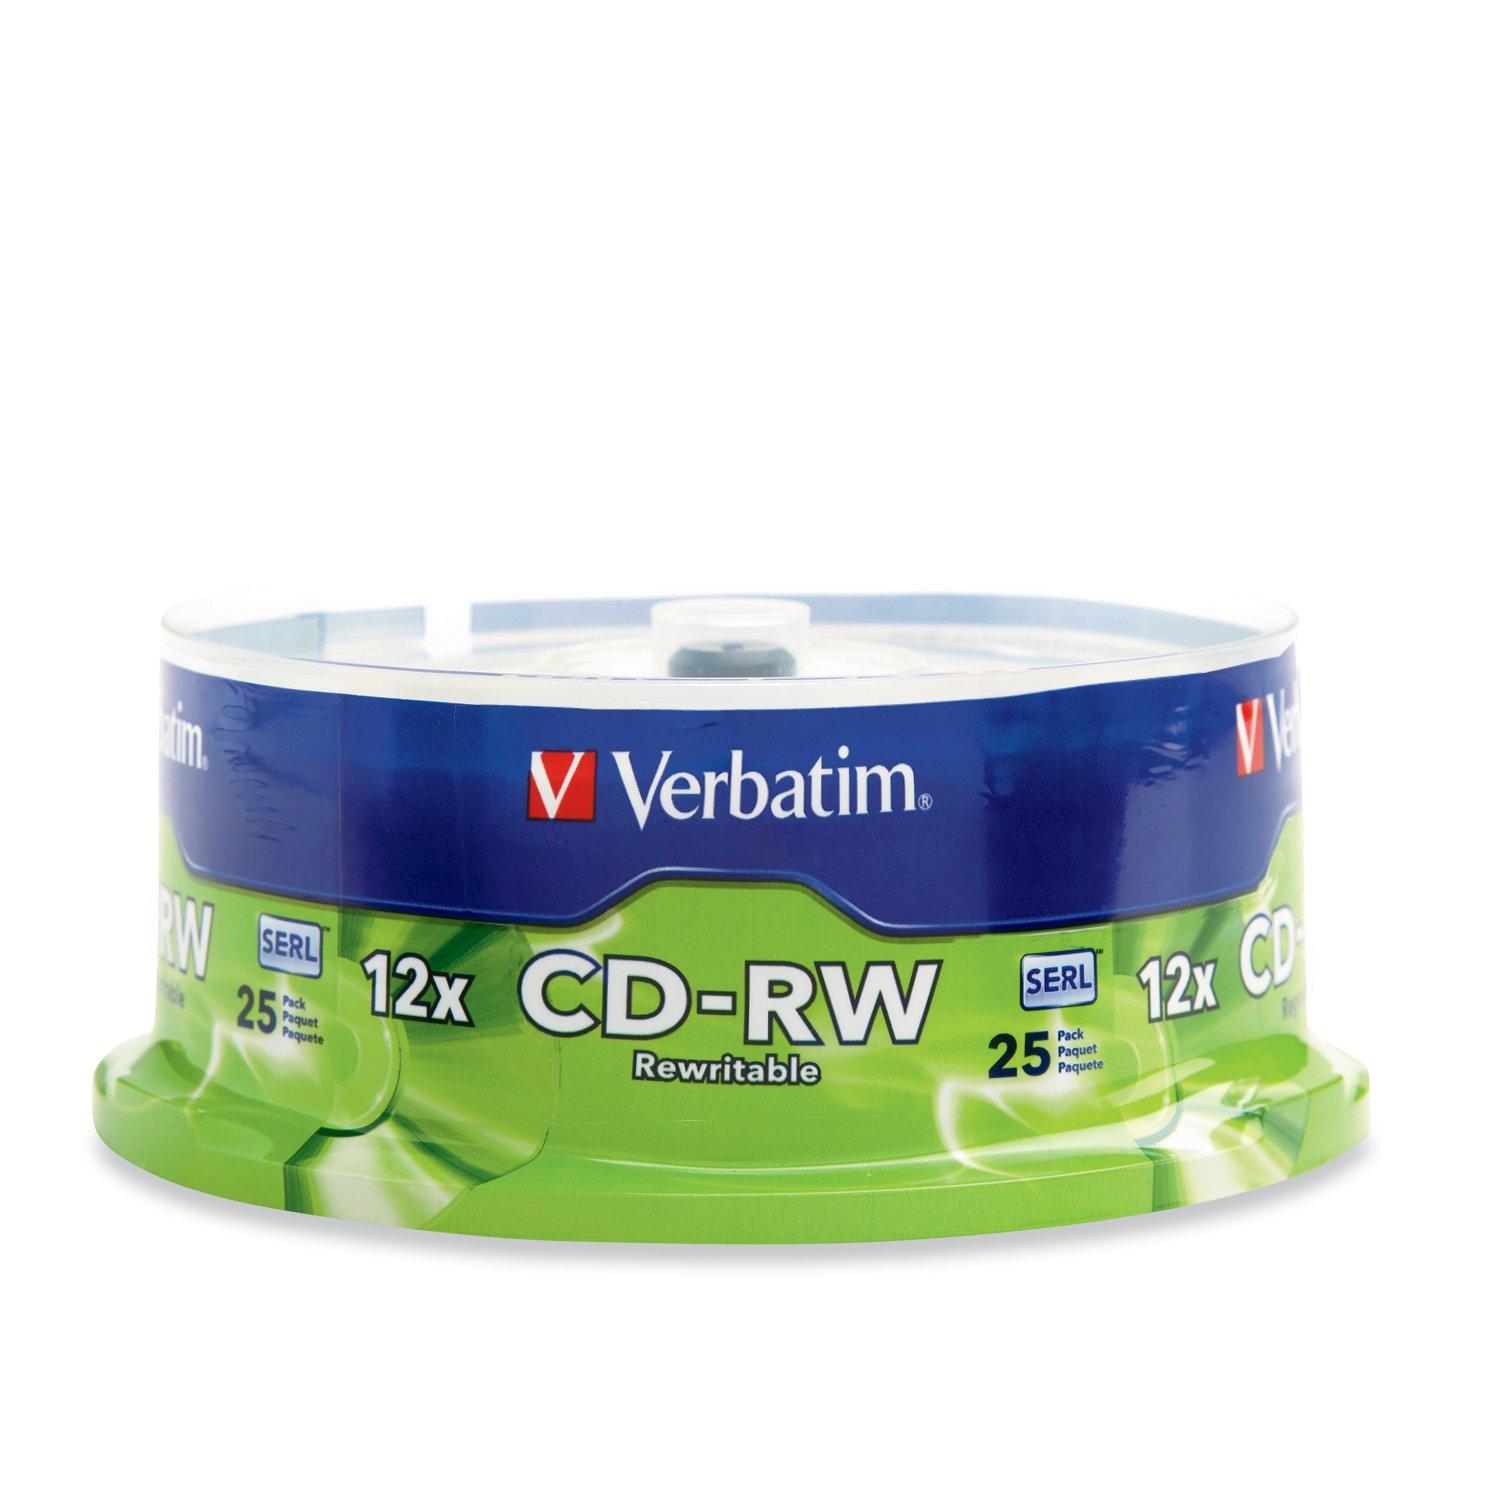 DISCO COMPACTO VERBATIM CD-RW 12X 80MIN 700MB TORRE 25PIEZAS VB95155 - VB95155